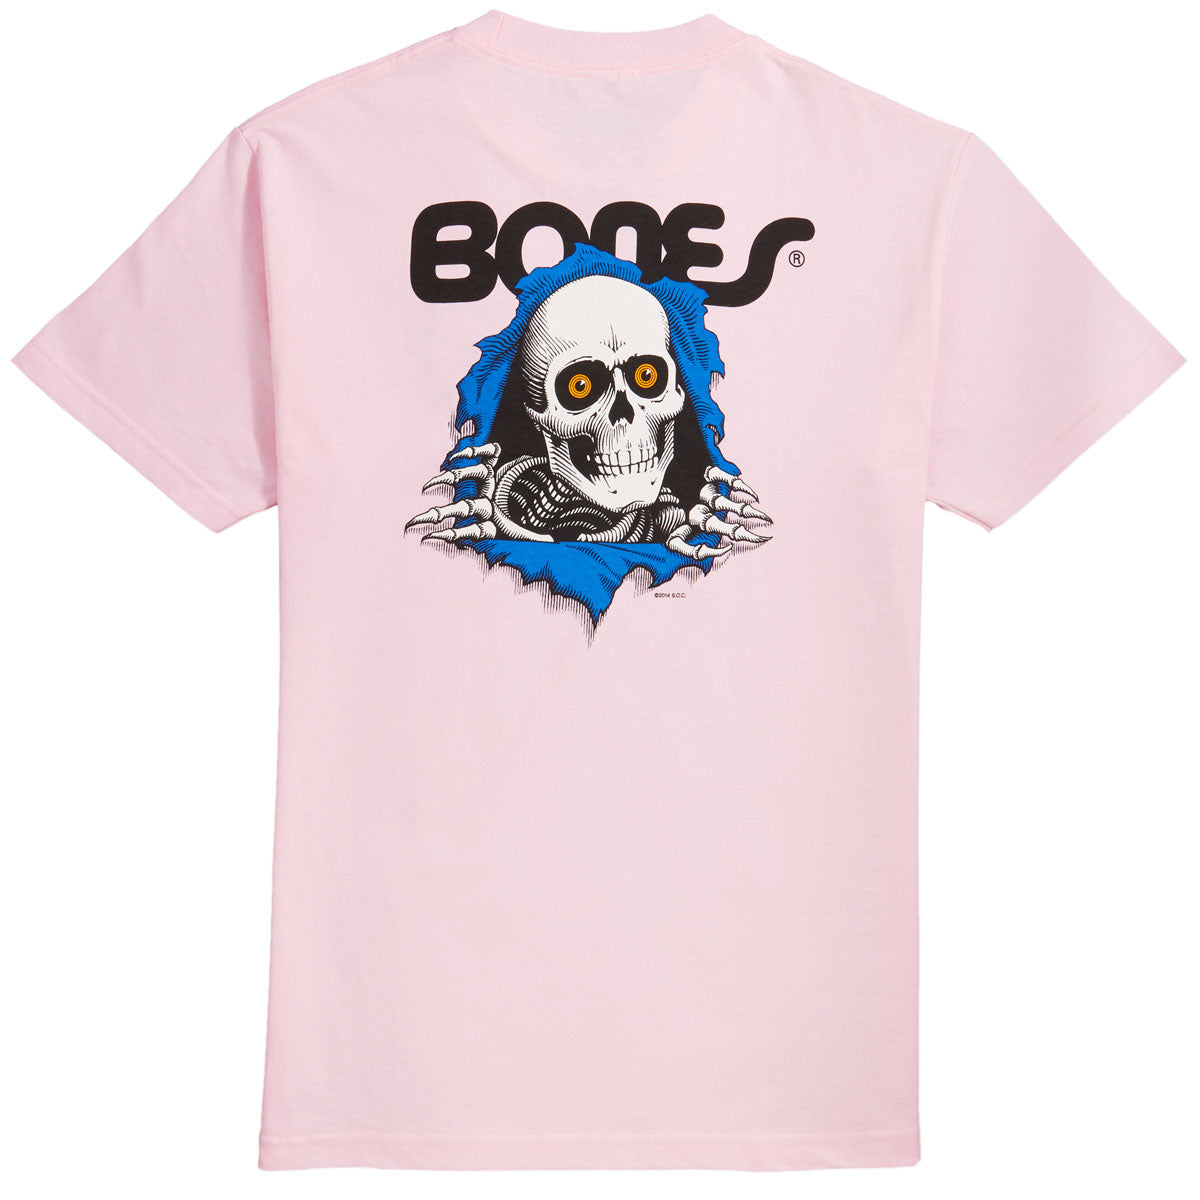 Powell-Peralta Ripper T-Shirt - Light Pink image 1